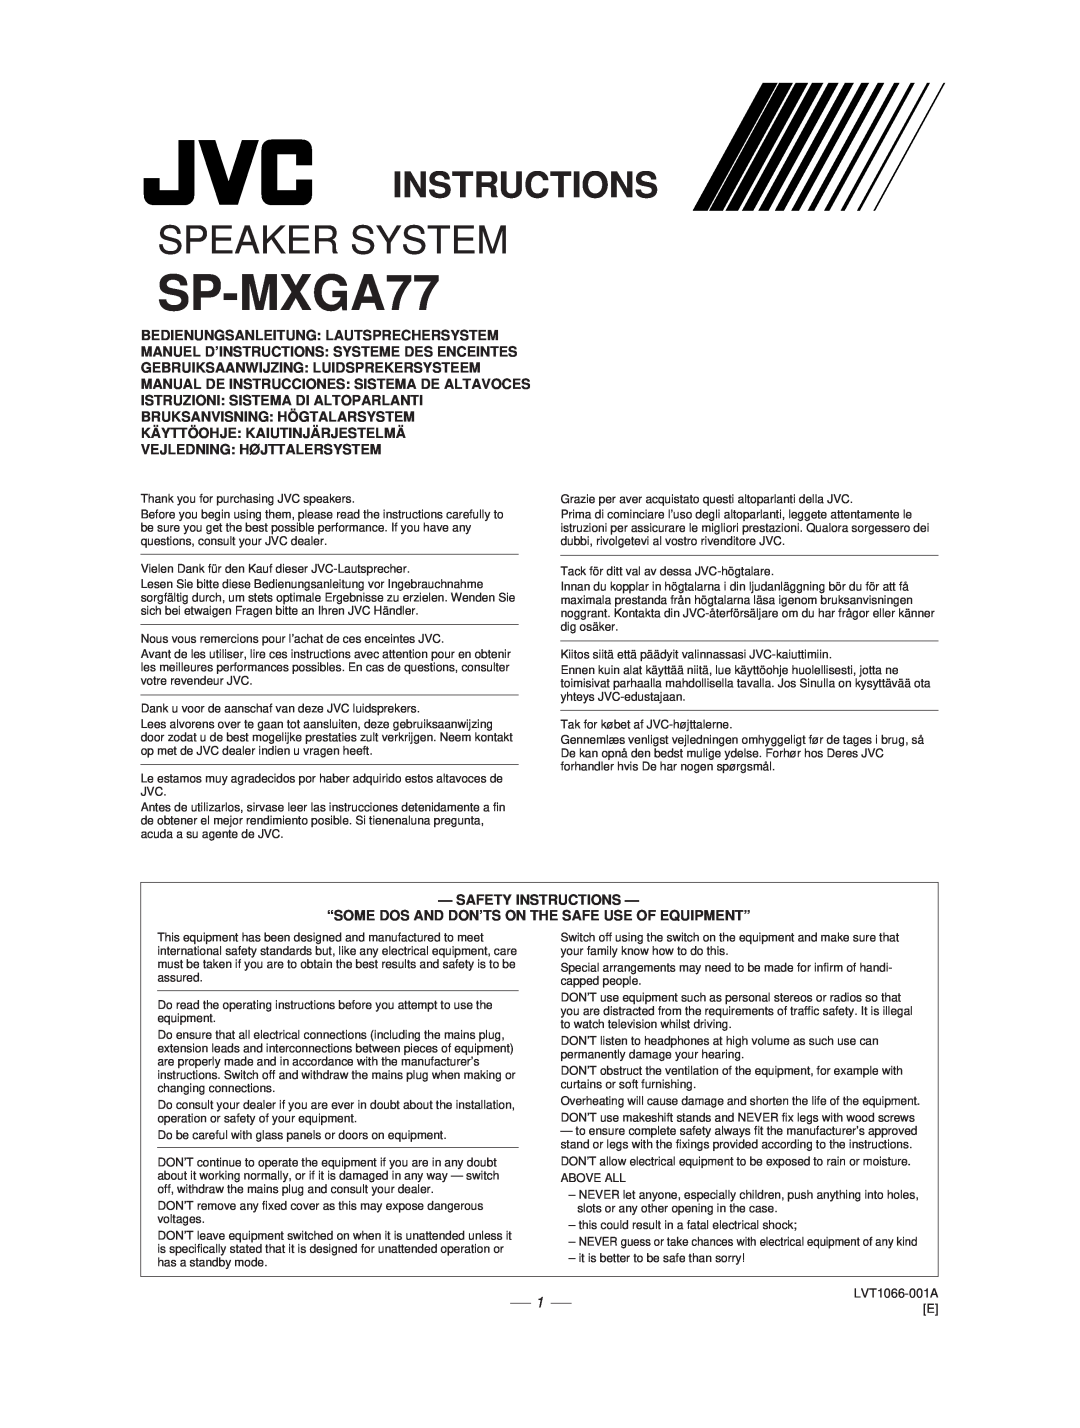 JVC CA-MXGA77, CA-MXGT88 manual Instructions, SP-MXGA77, Speaker System 